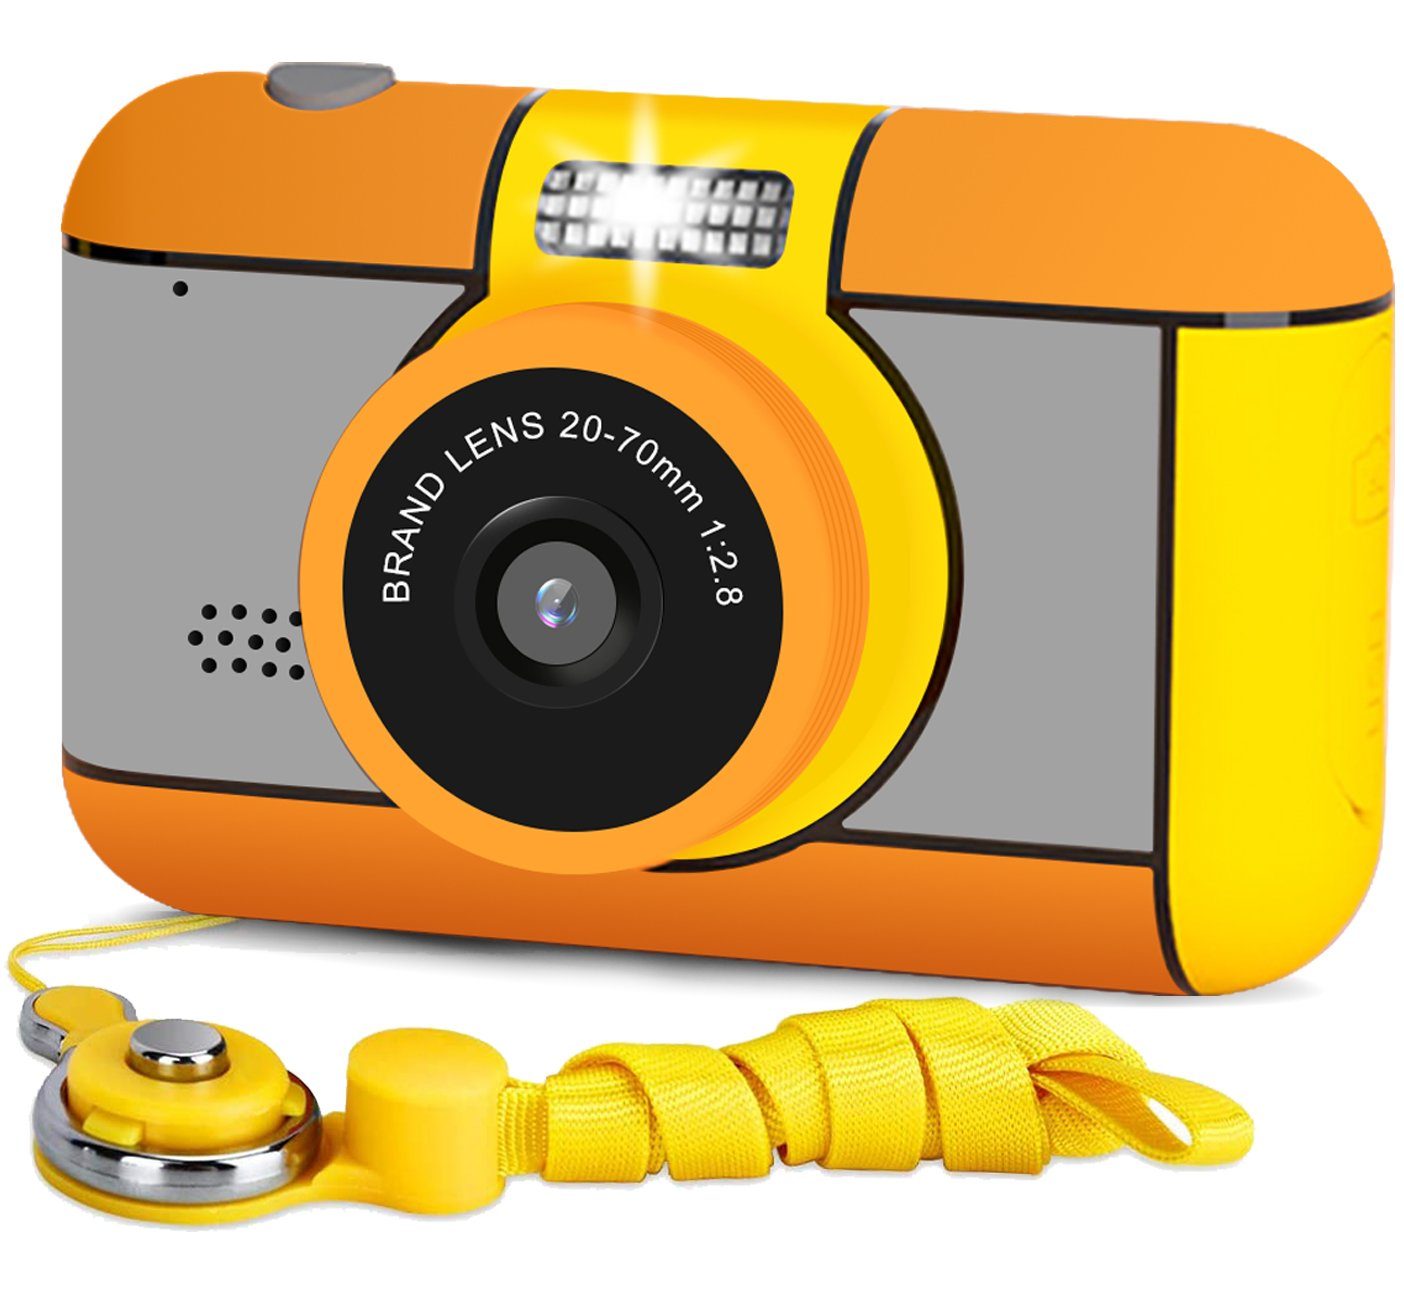 Vaxiuja »Kinderkamera, wiederaufladbare Kinderkamera, 2,4-Zoll-Digitalkamera,  16 MP 1080p High-Definition-Digitalvideokamera, Spielzeug, Jungengeschenke«  Kinderkamera online kaufen | OTTO